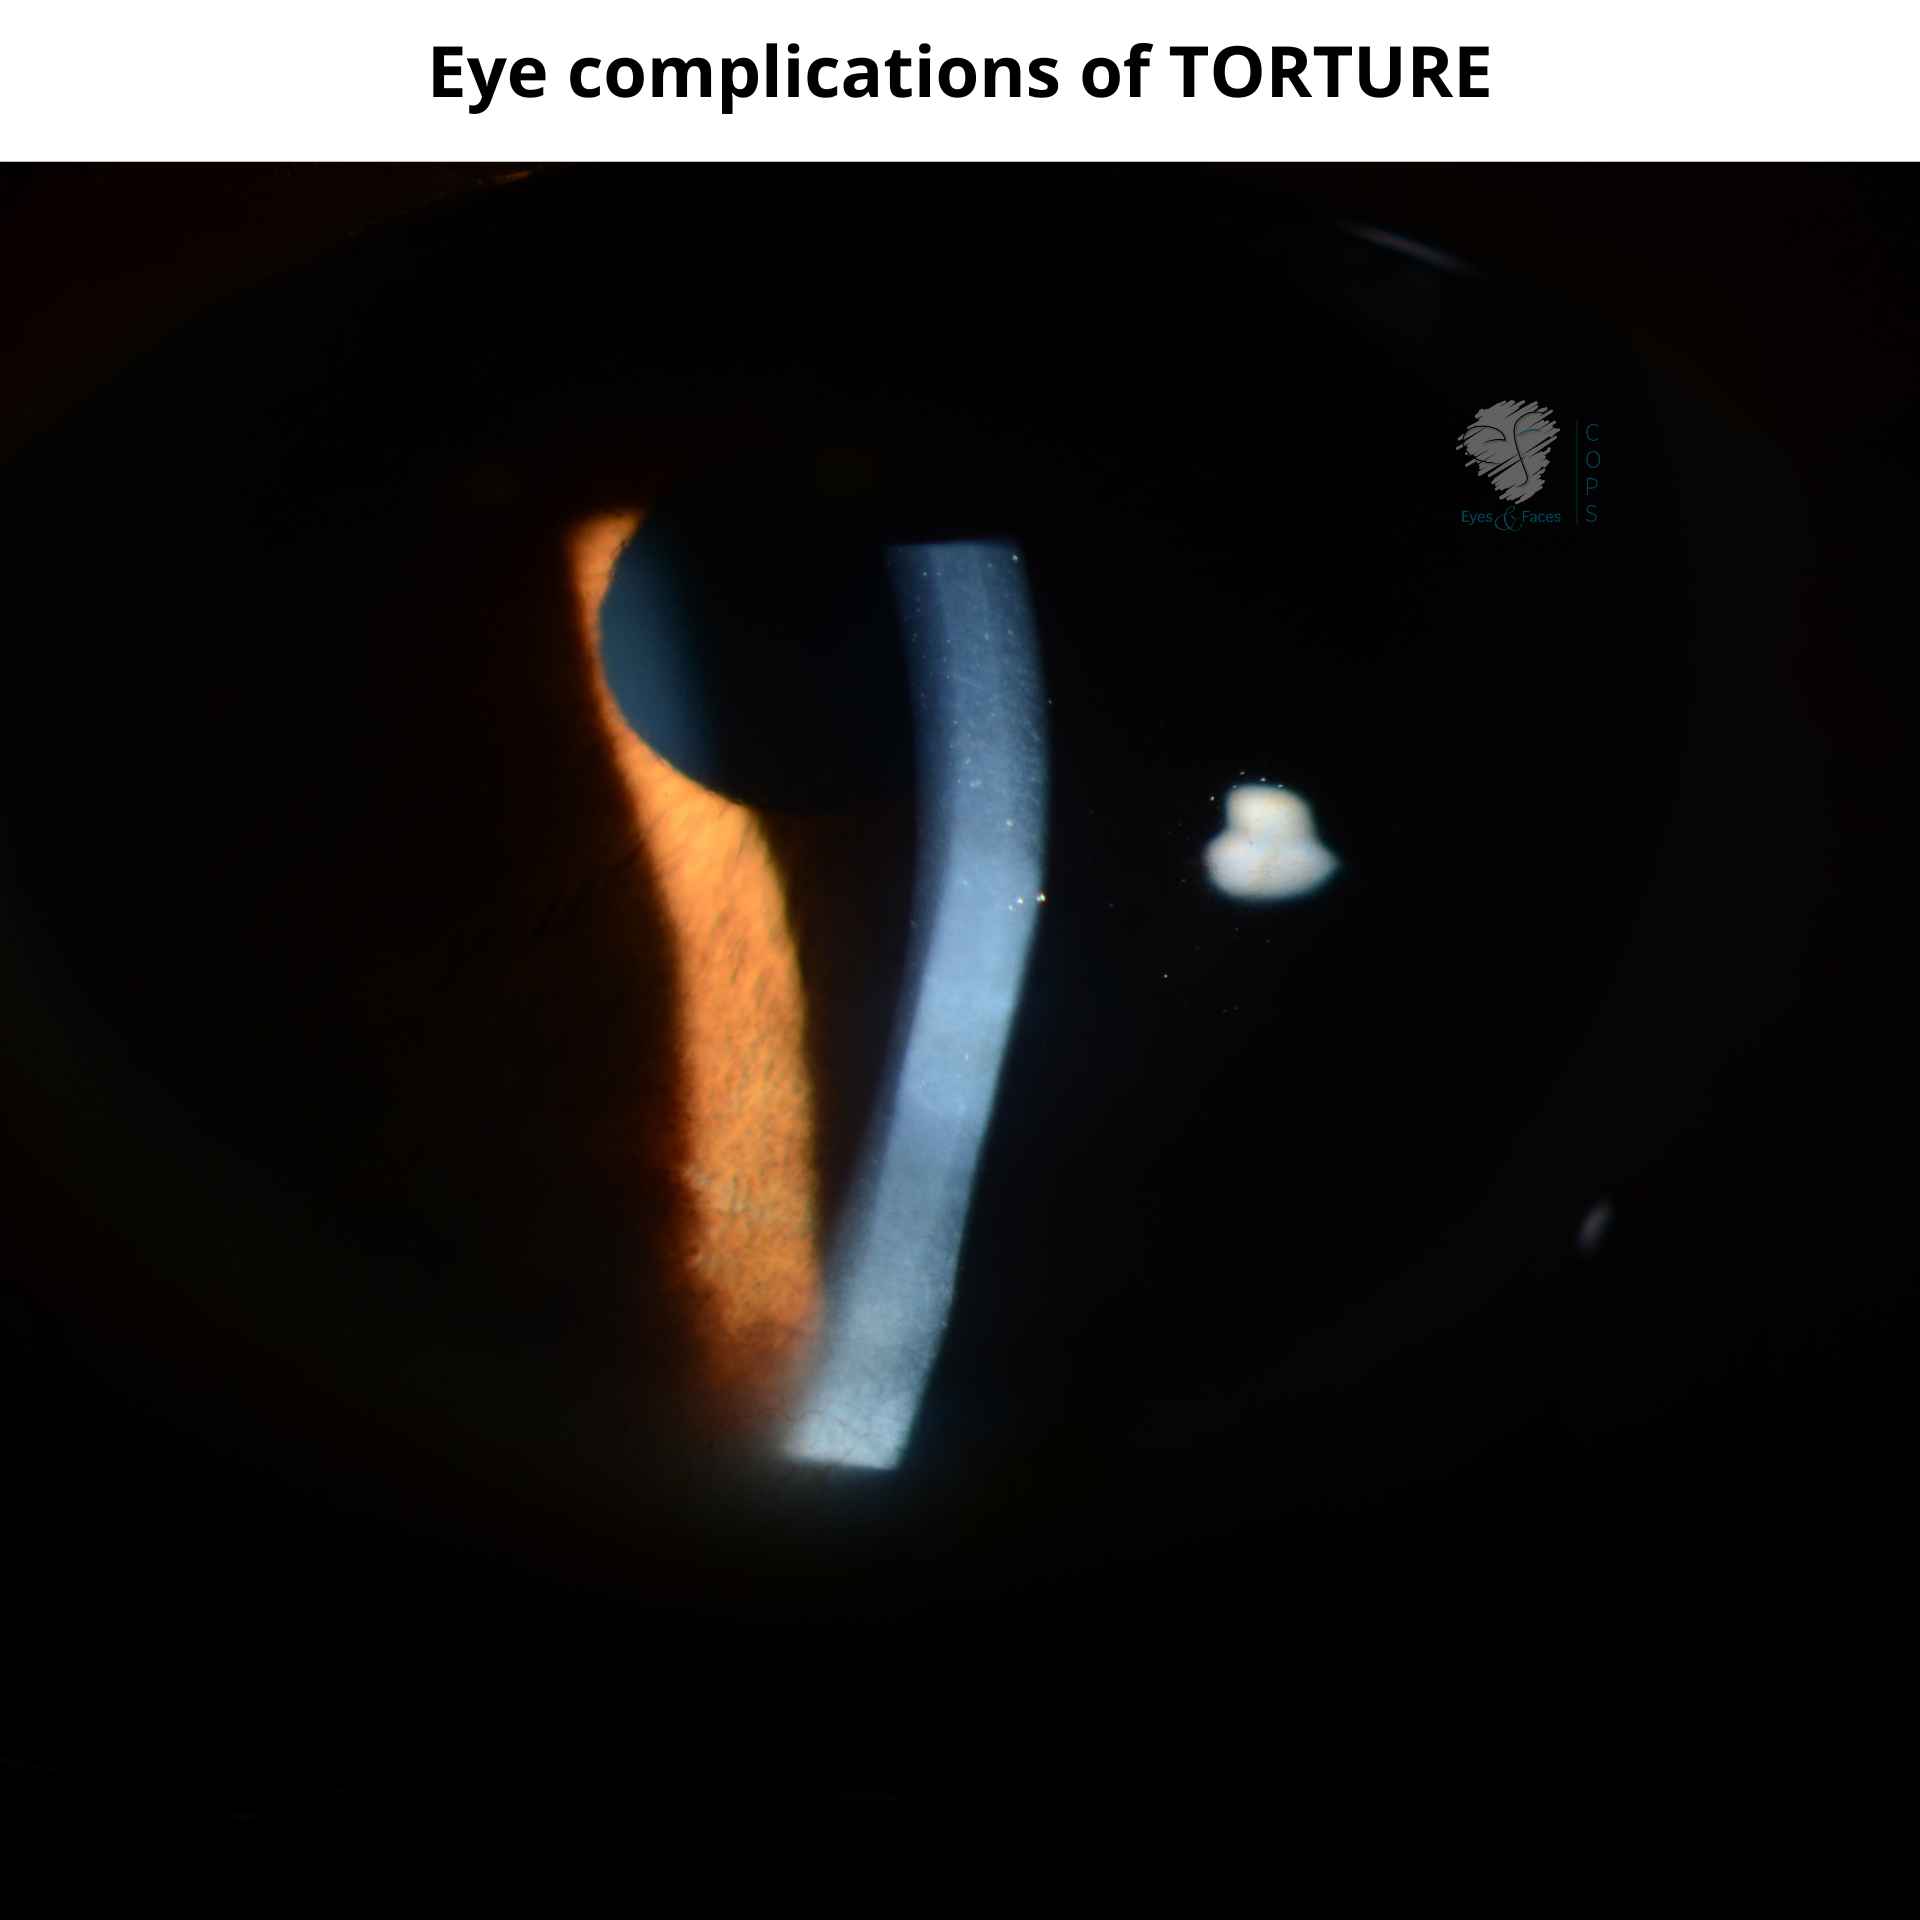 Eye complications of Torture, damaging the cornea.